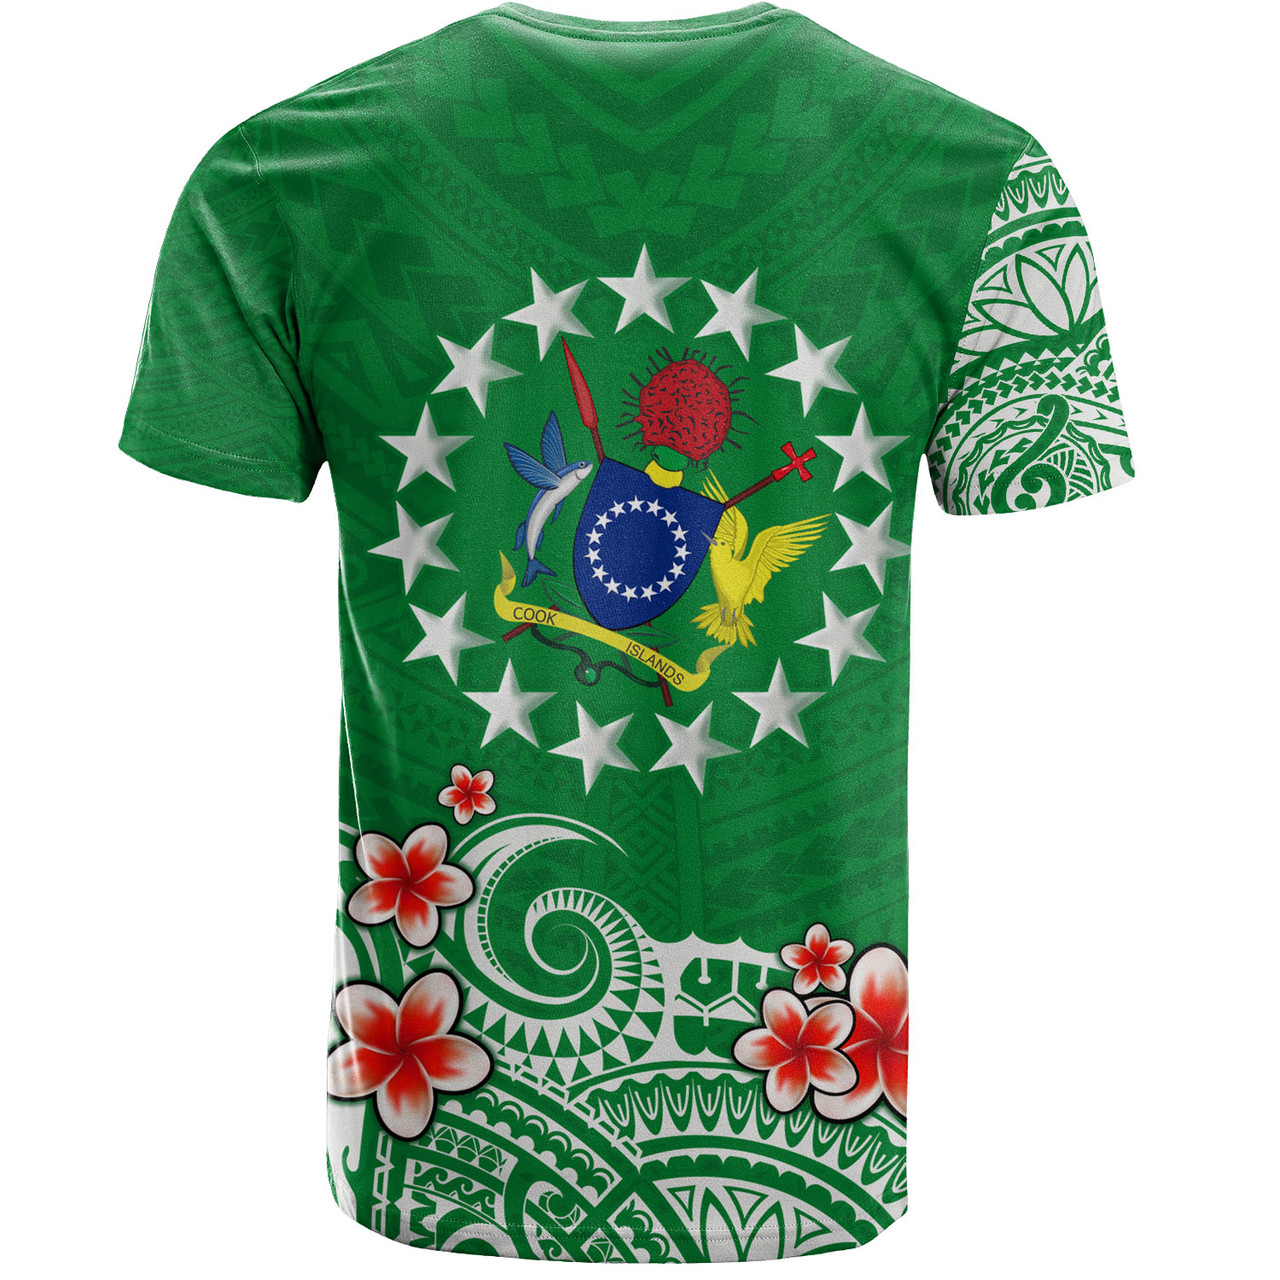 Cook Islands T-Shirt Plumeria Flowers Tribal Motif Design